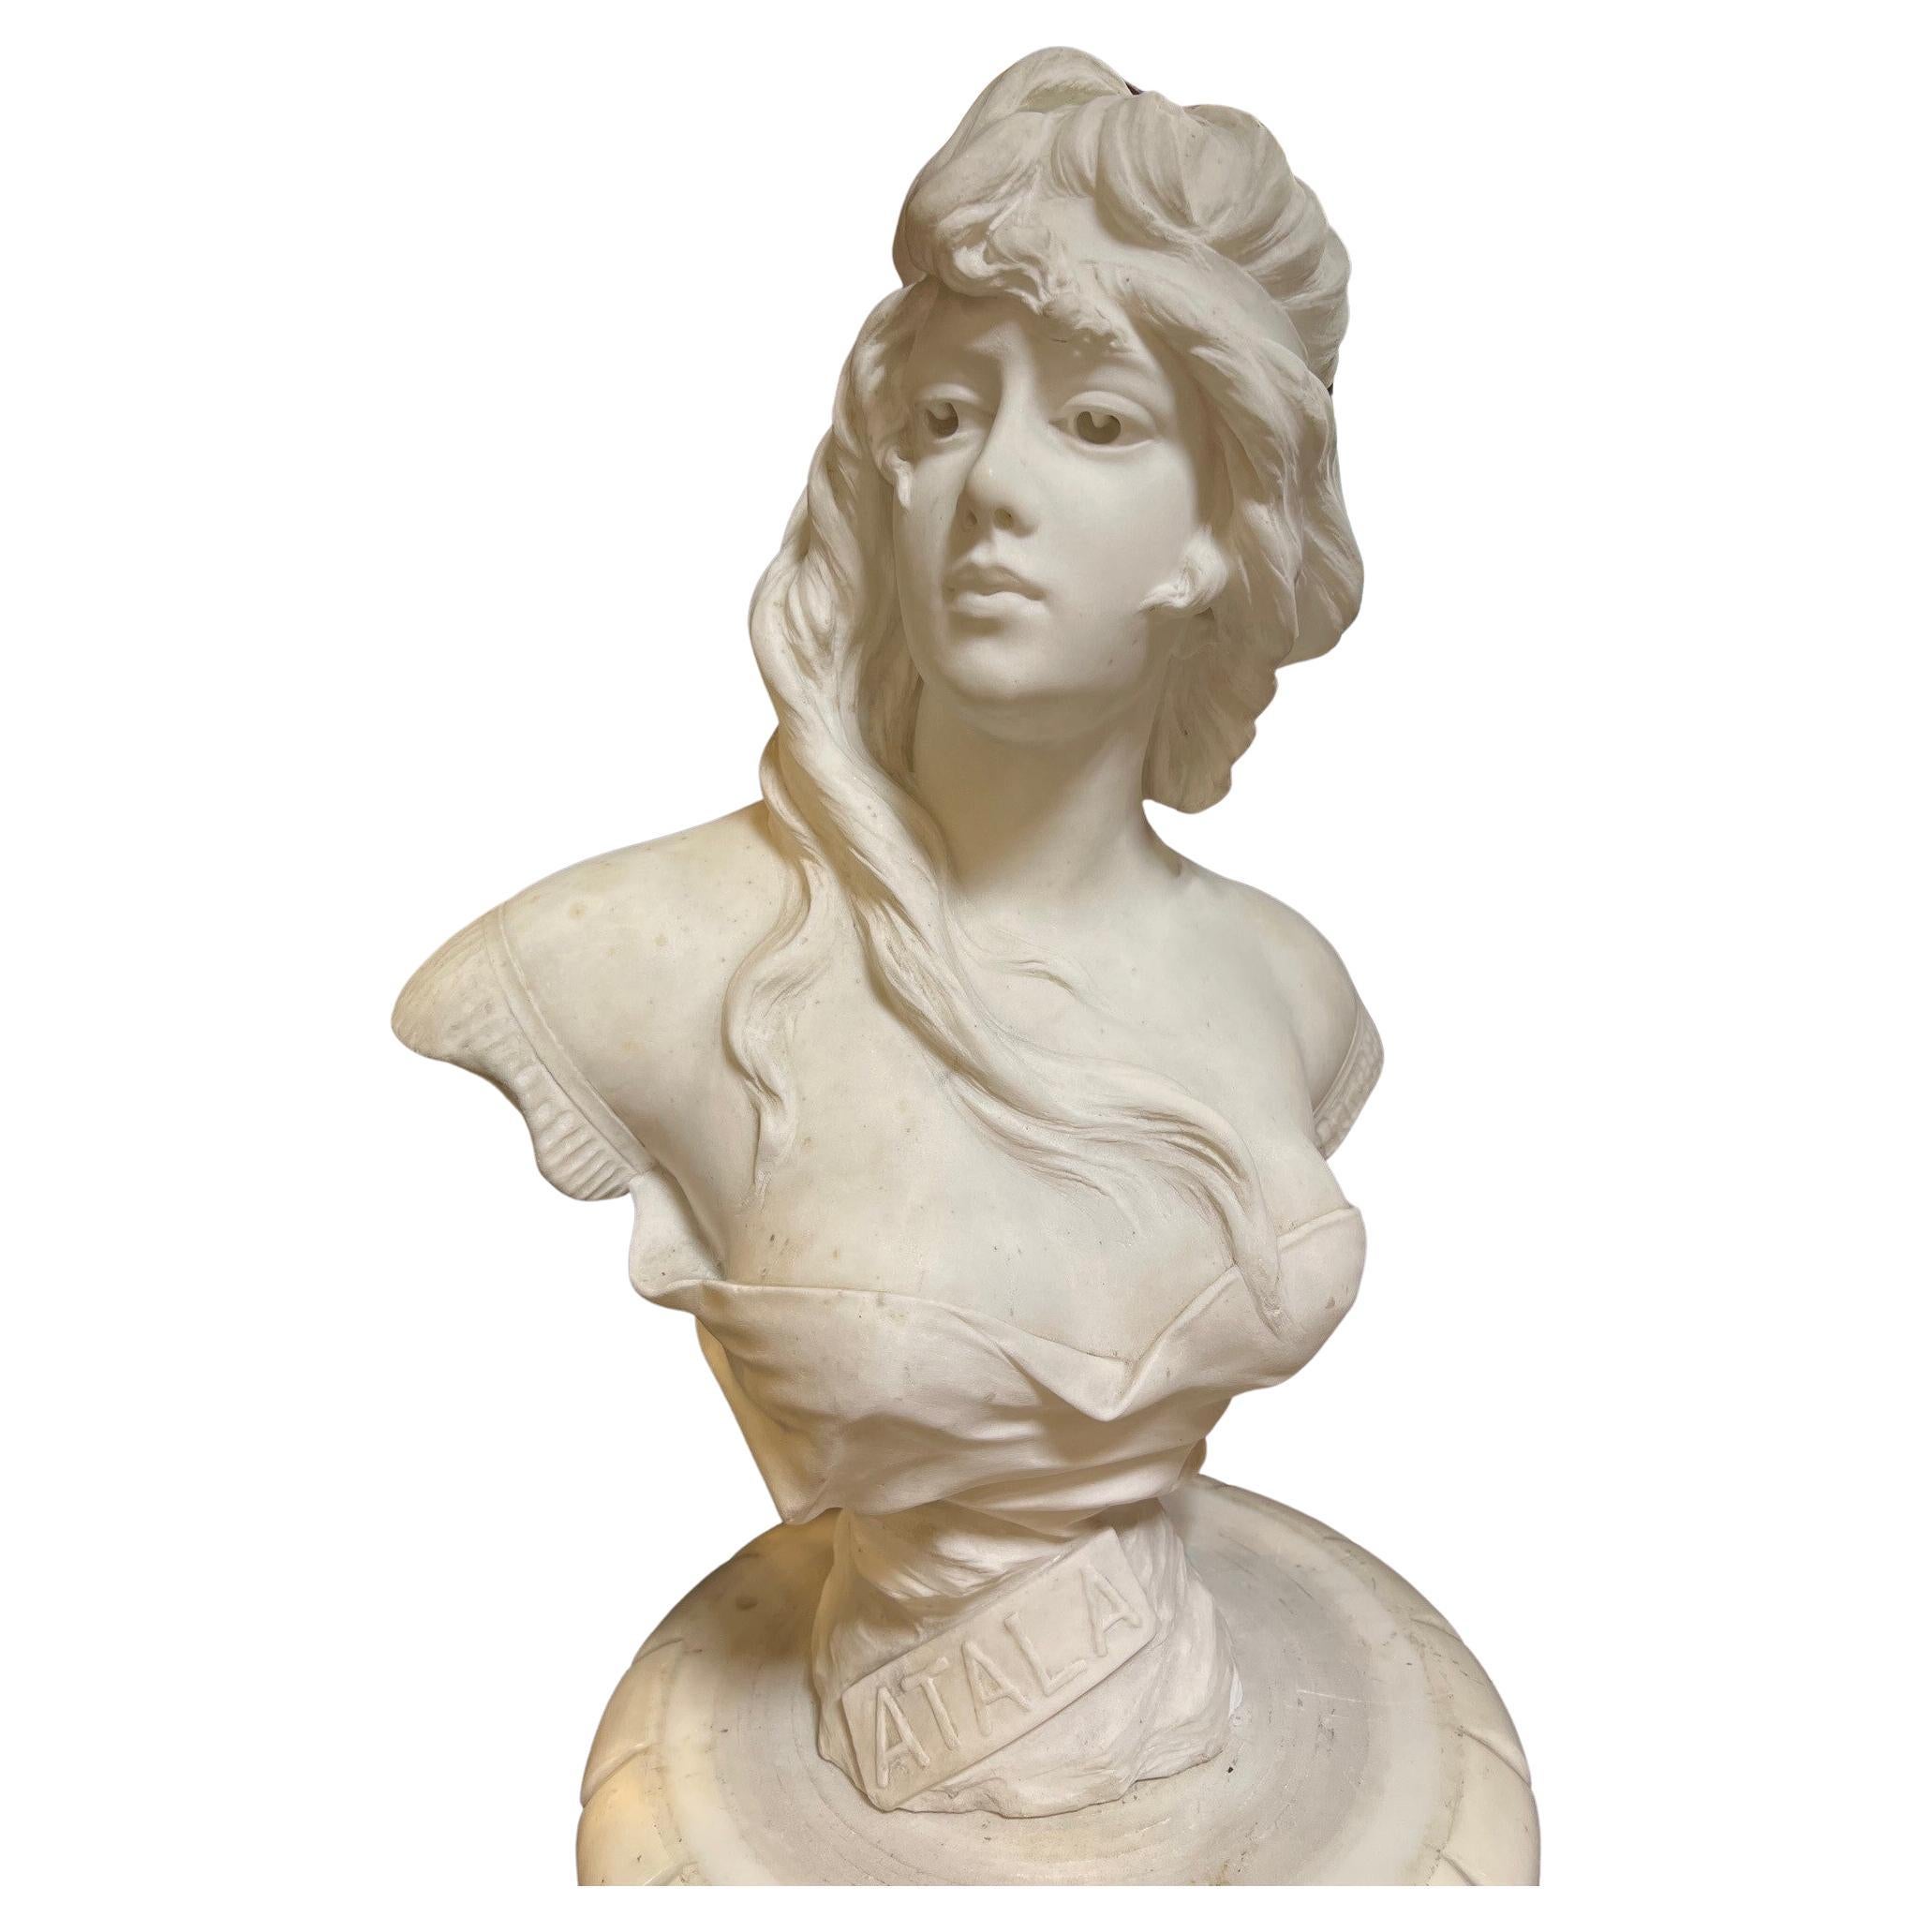  Fin du 19ème siècle Buste en marbre ancien ATALA Signé A. Piazza Carrara 